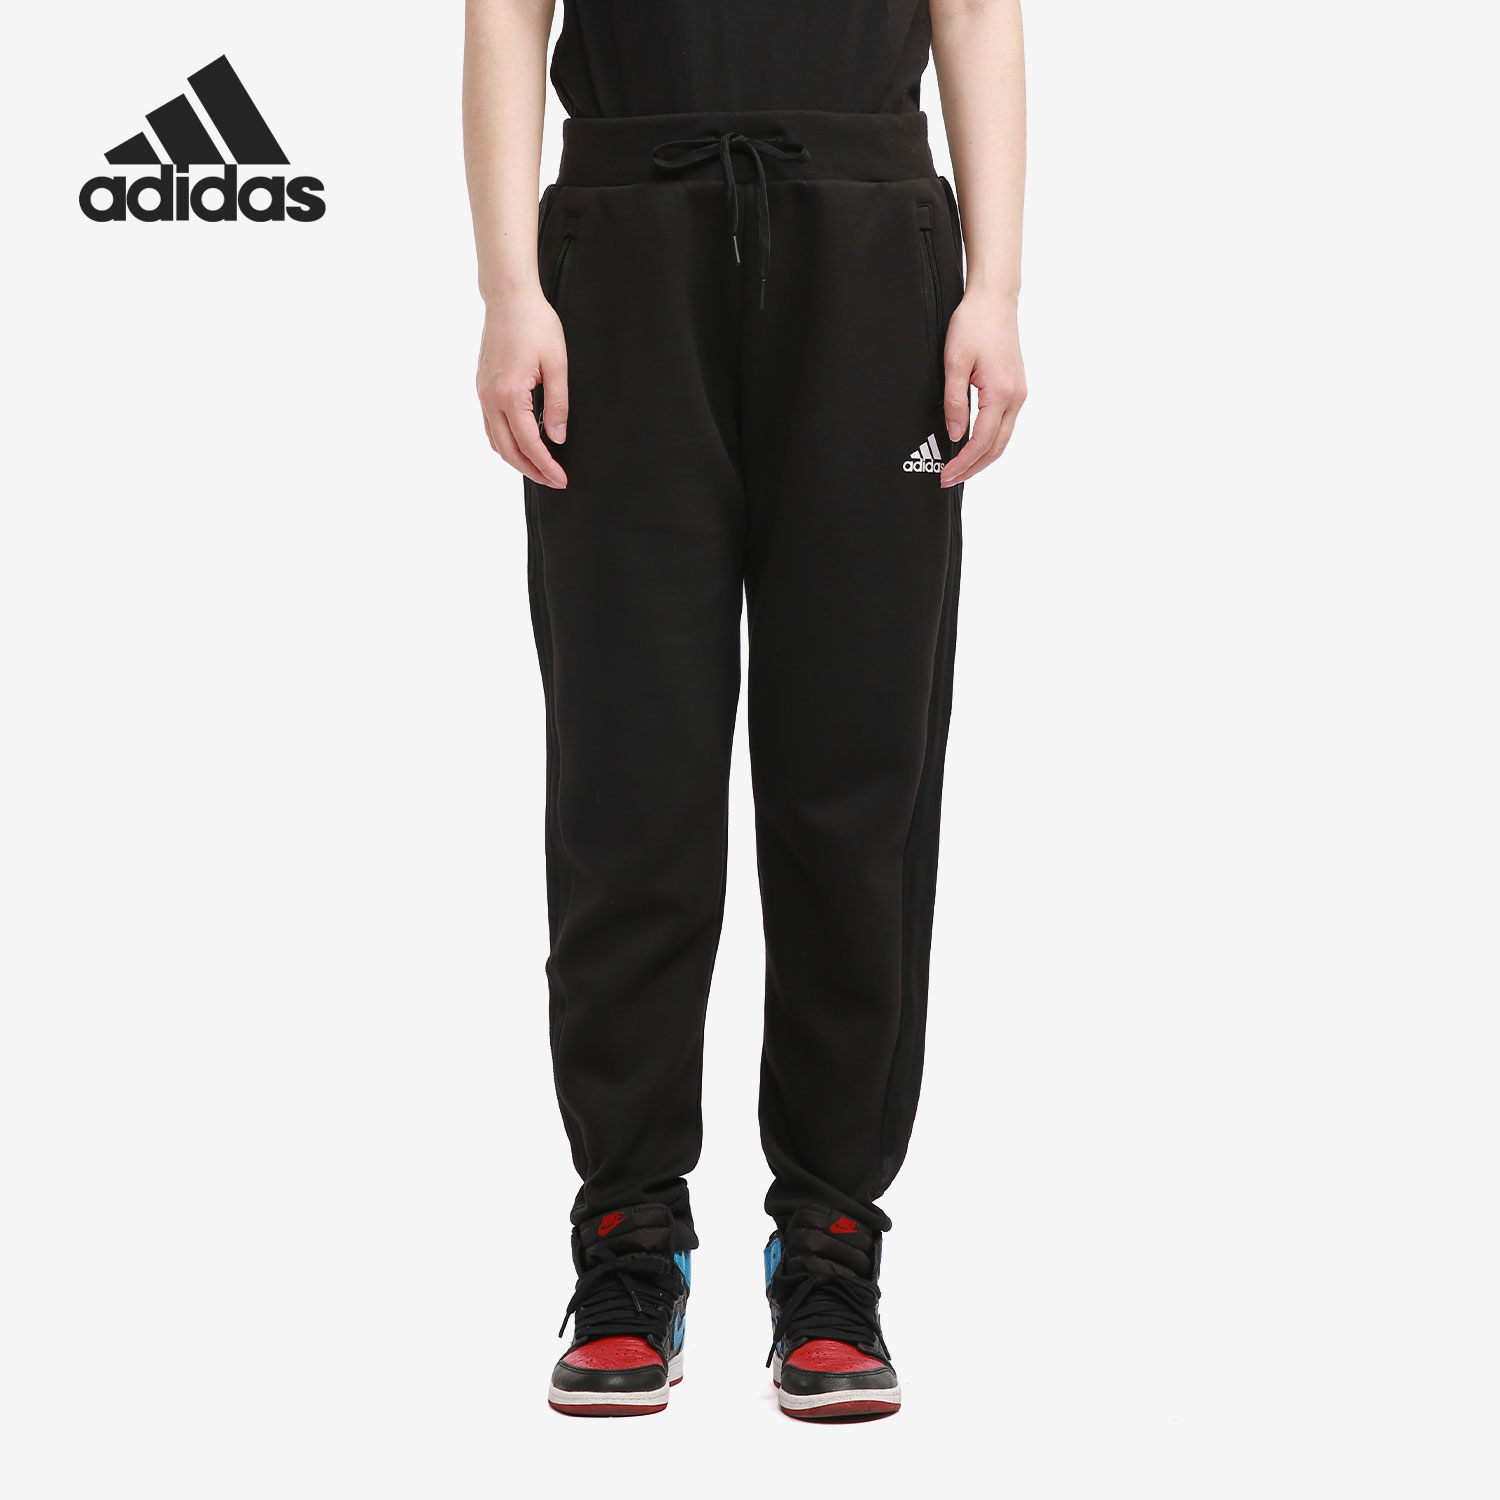 Adidas/阿迪达斯正品 FI PT DK 女子训练运动休闲收口裤装GT6825